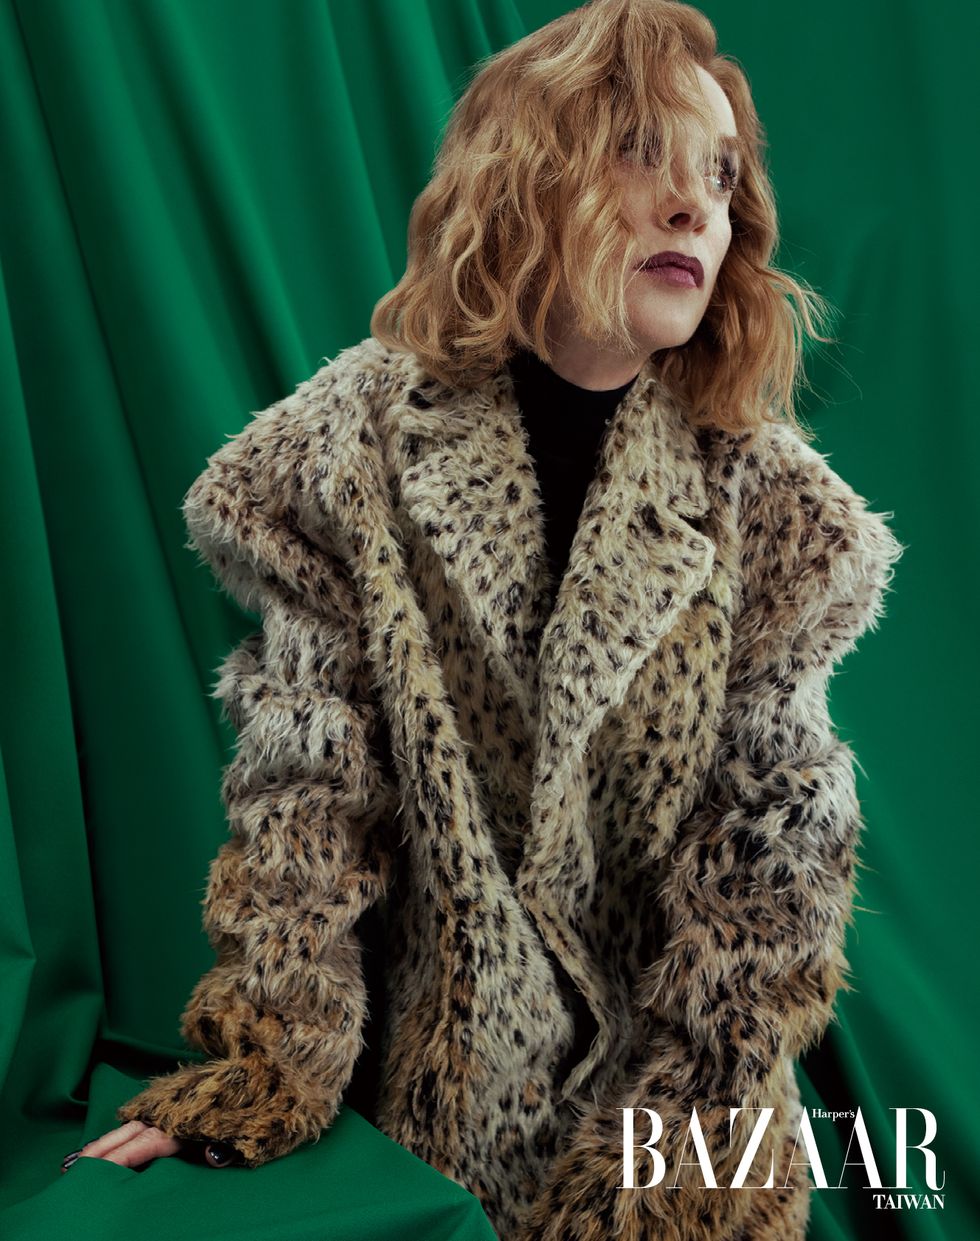 a woman wearing a fur coat